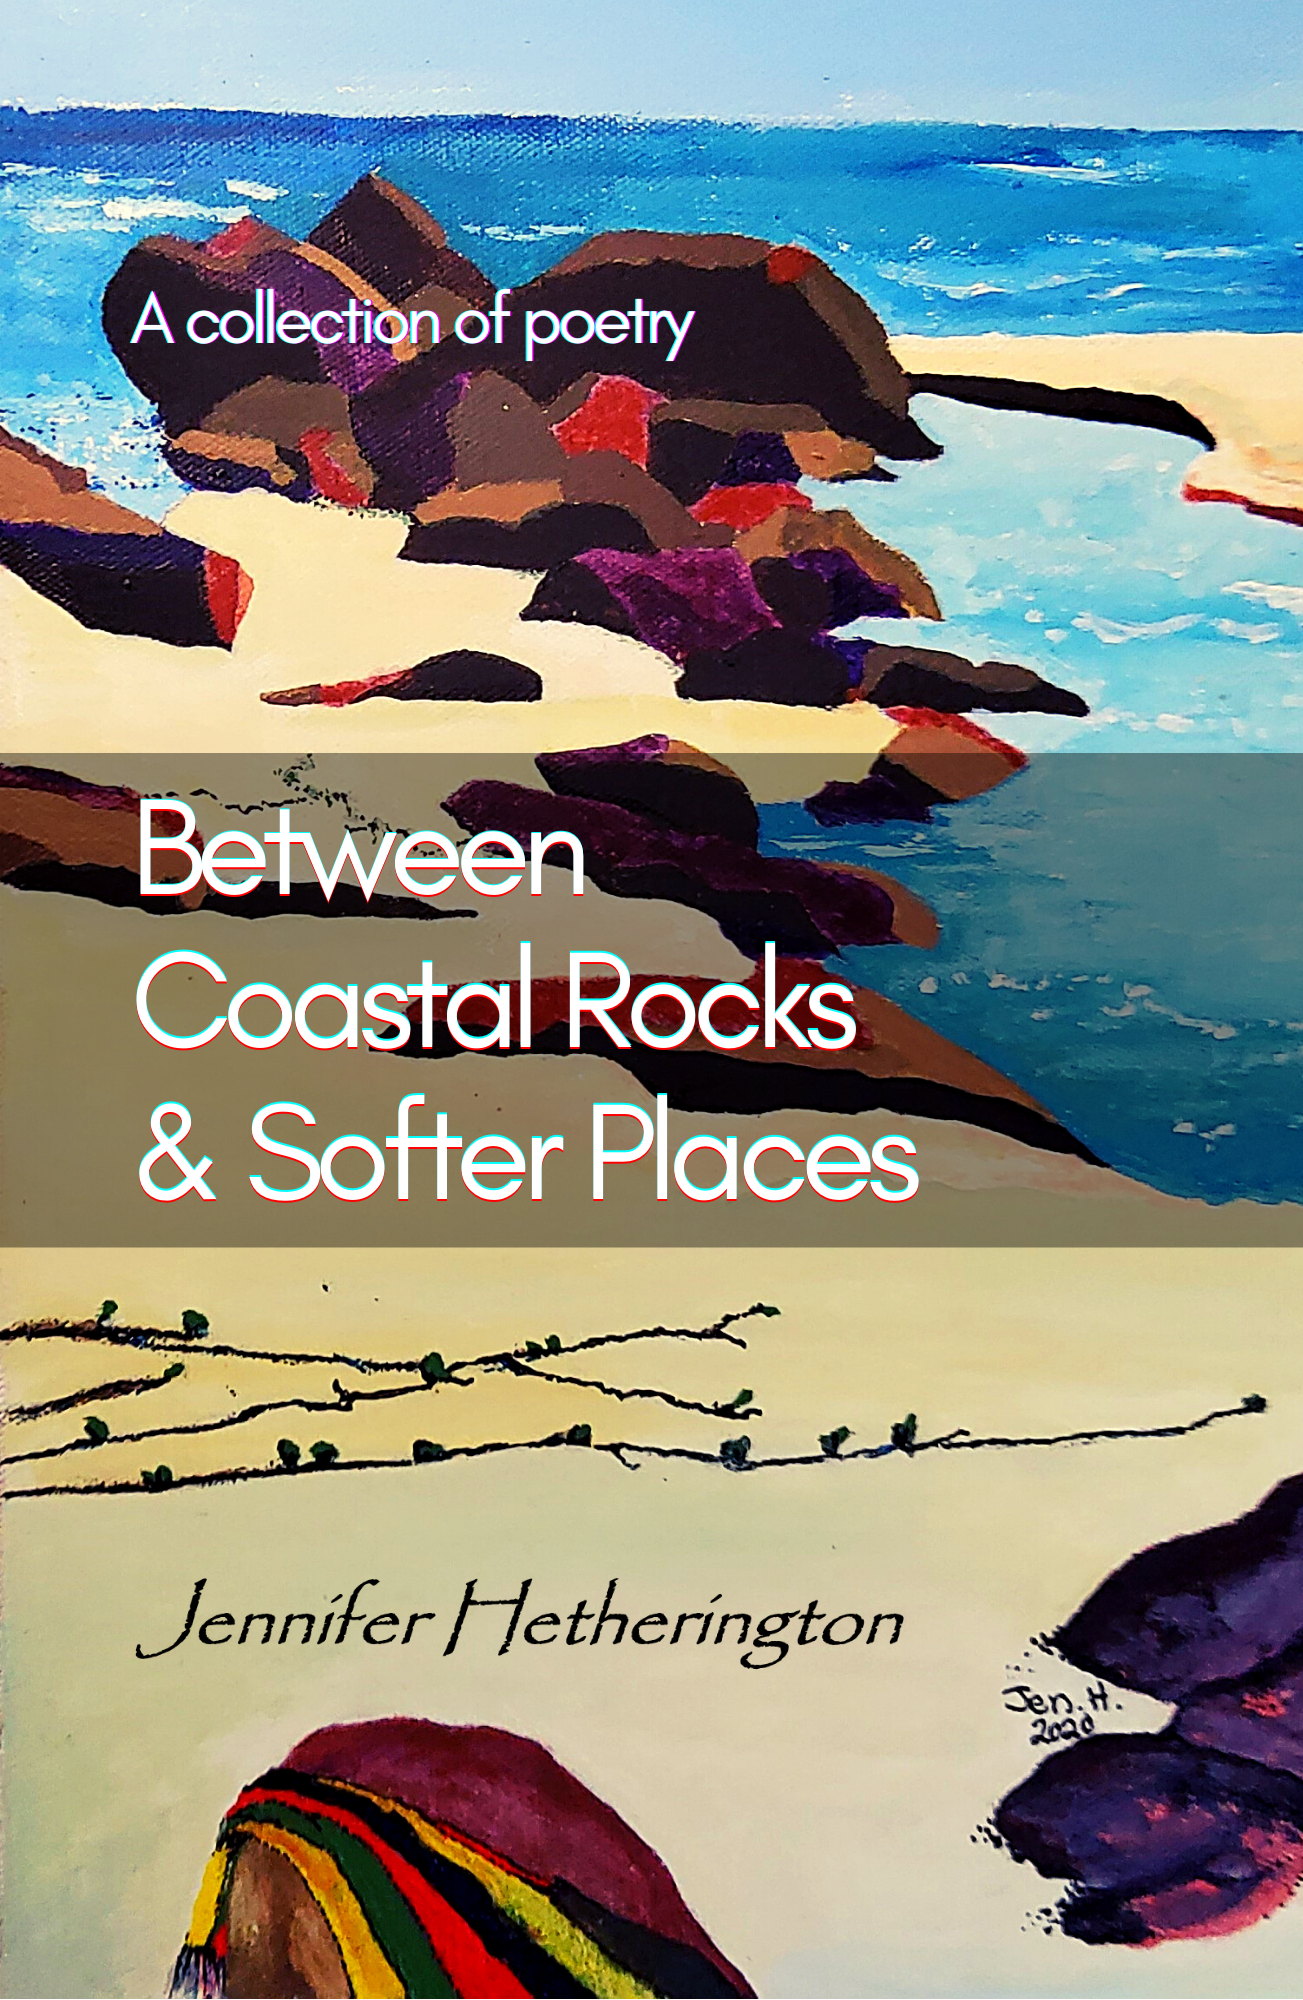 Between Coastal Rocks & Softer Places